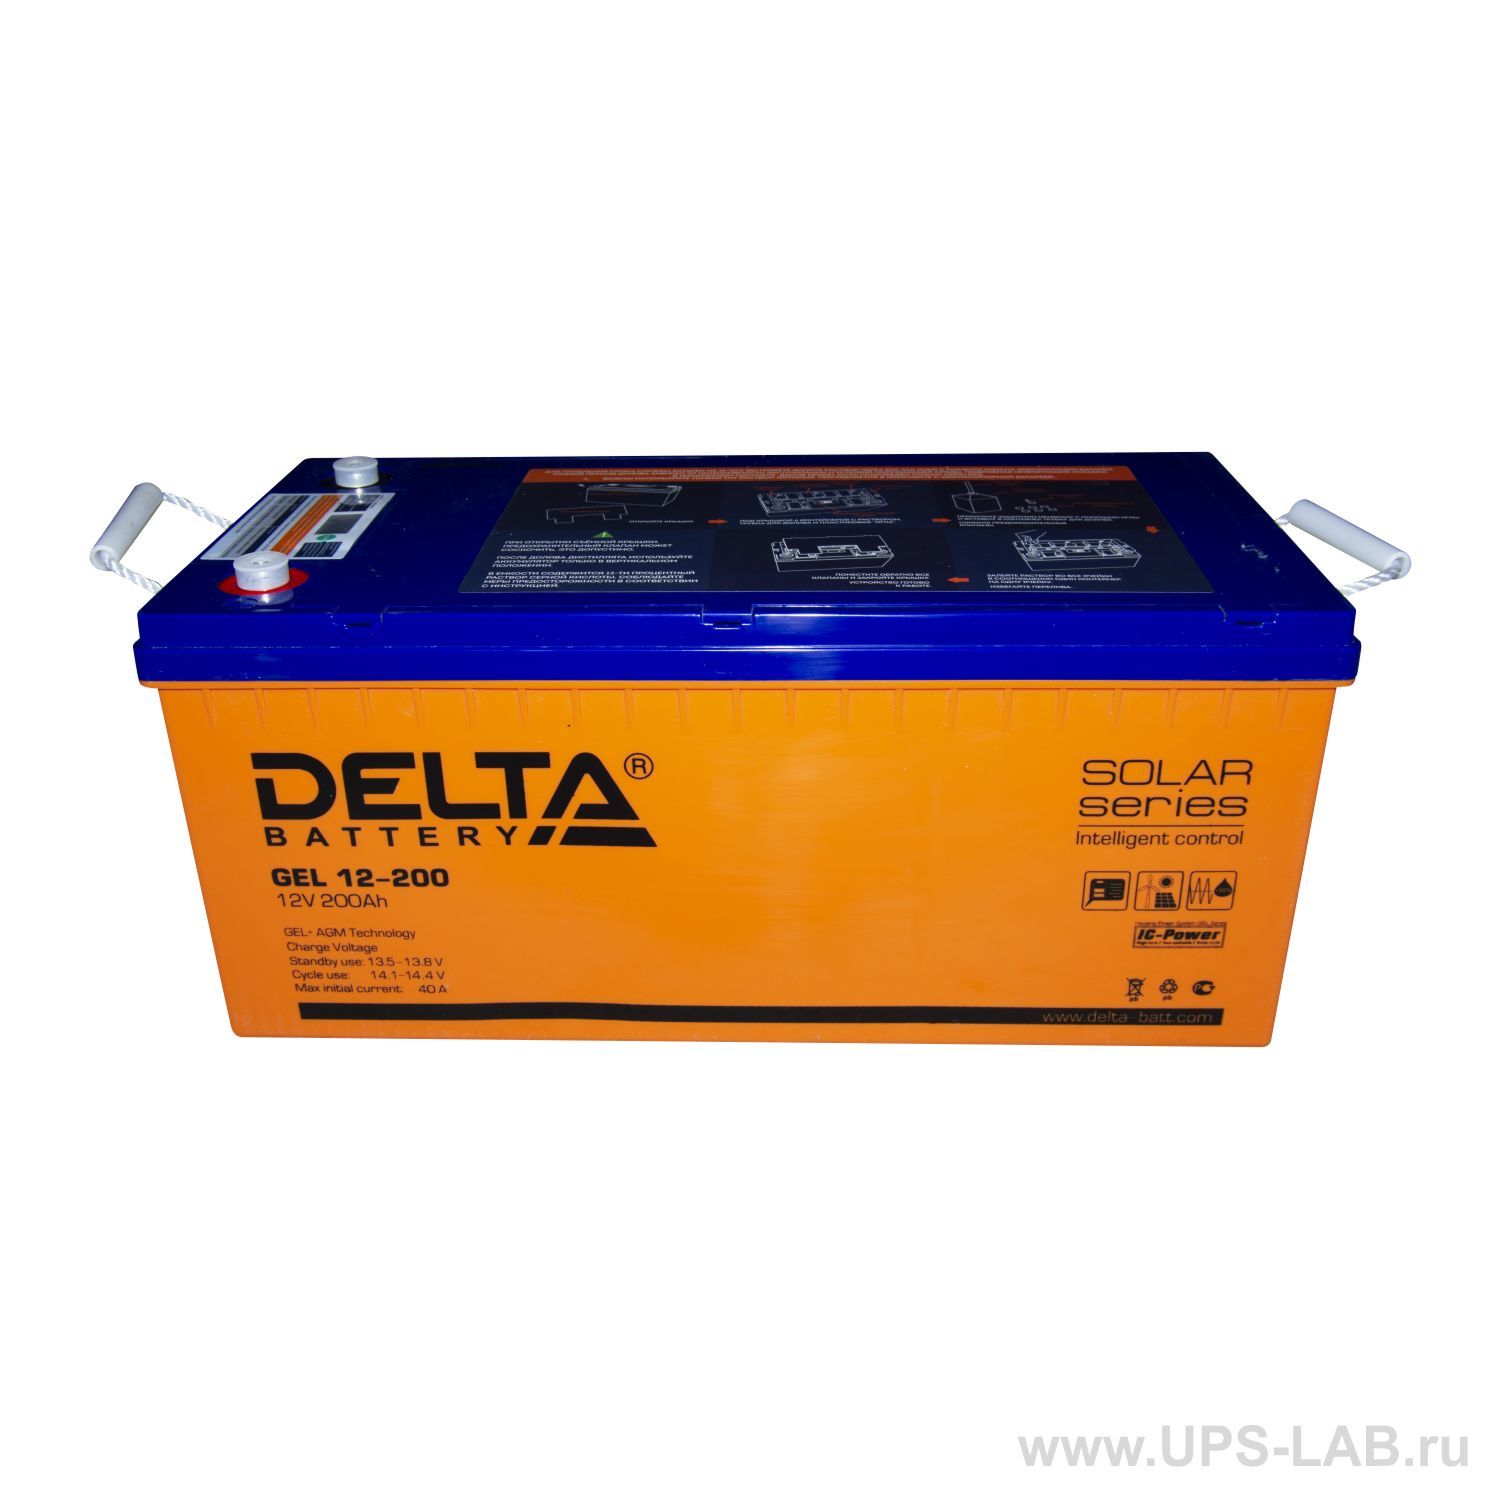 Gel 12 200. АКБ Gel 220 Ah. Аккумуляторная батарея Delta Battery Gel 12-200 200 а·ч. Карбоновый аккумулятор 200 Ач. АКБ 200 Ач для ИБП 6gfm 200x.